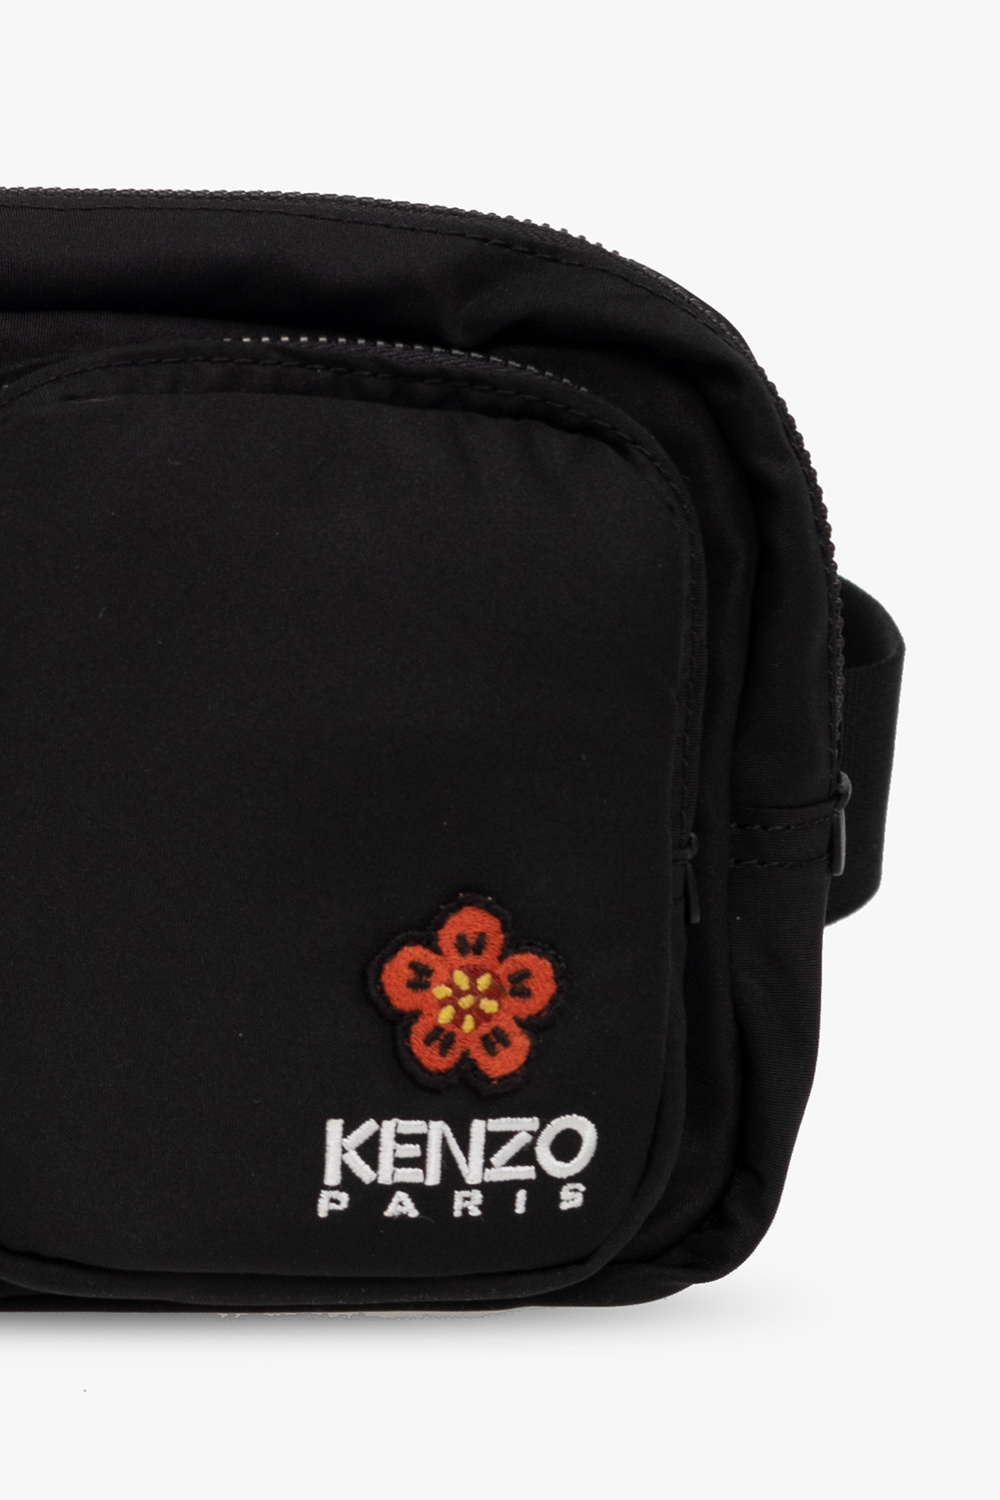 Kenzo Madwave Vent Dry Drawstring Bag